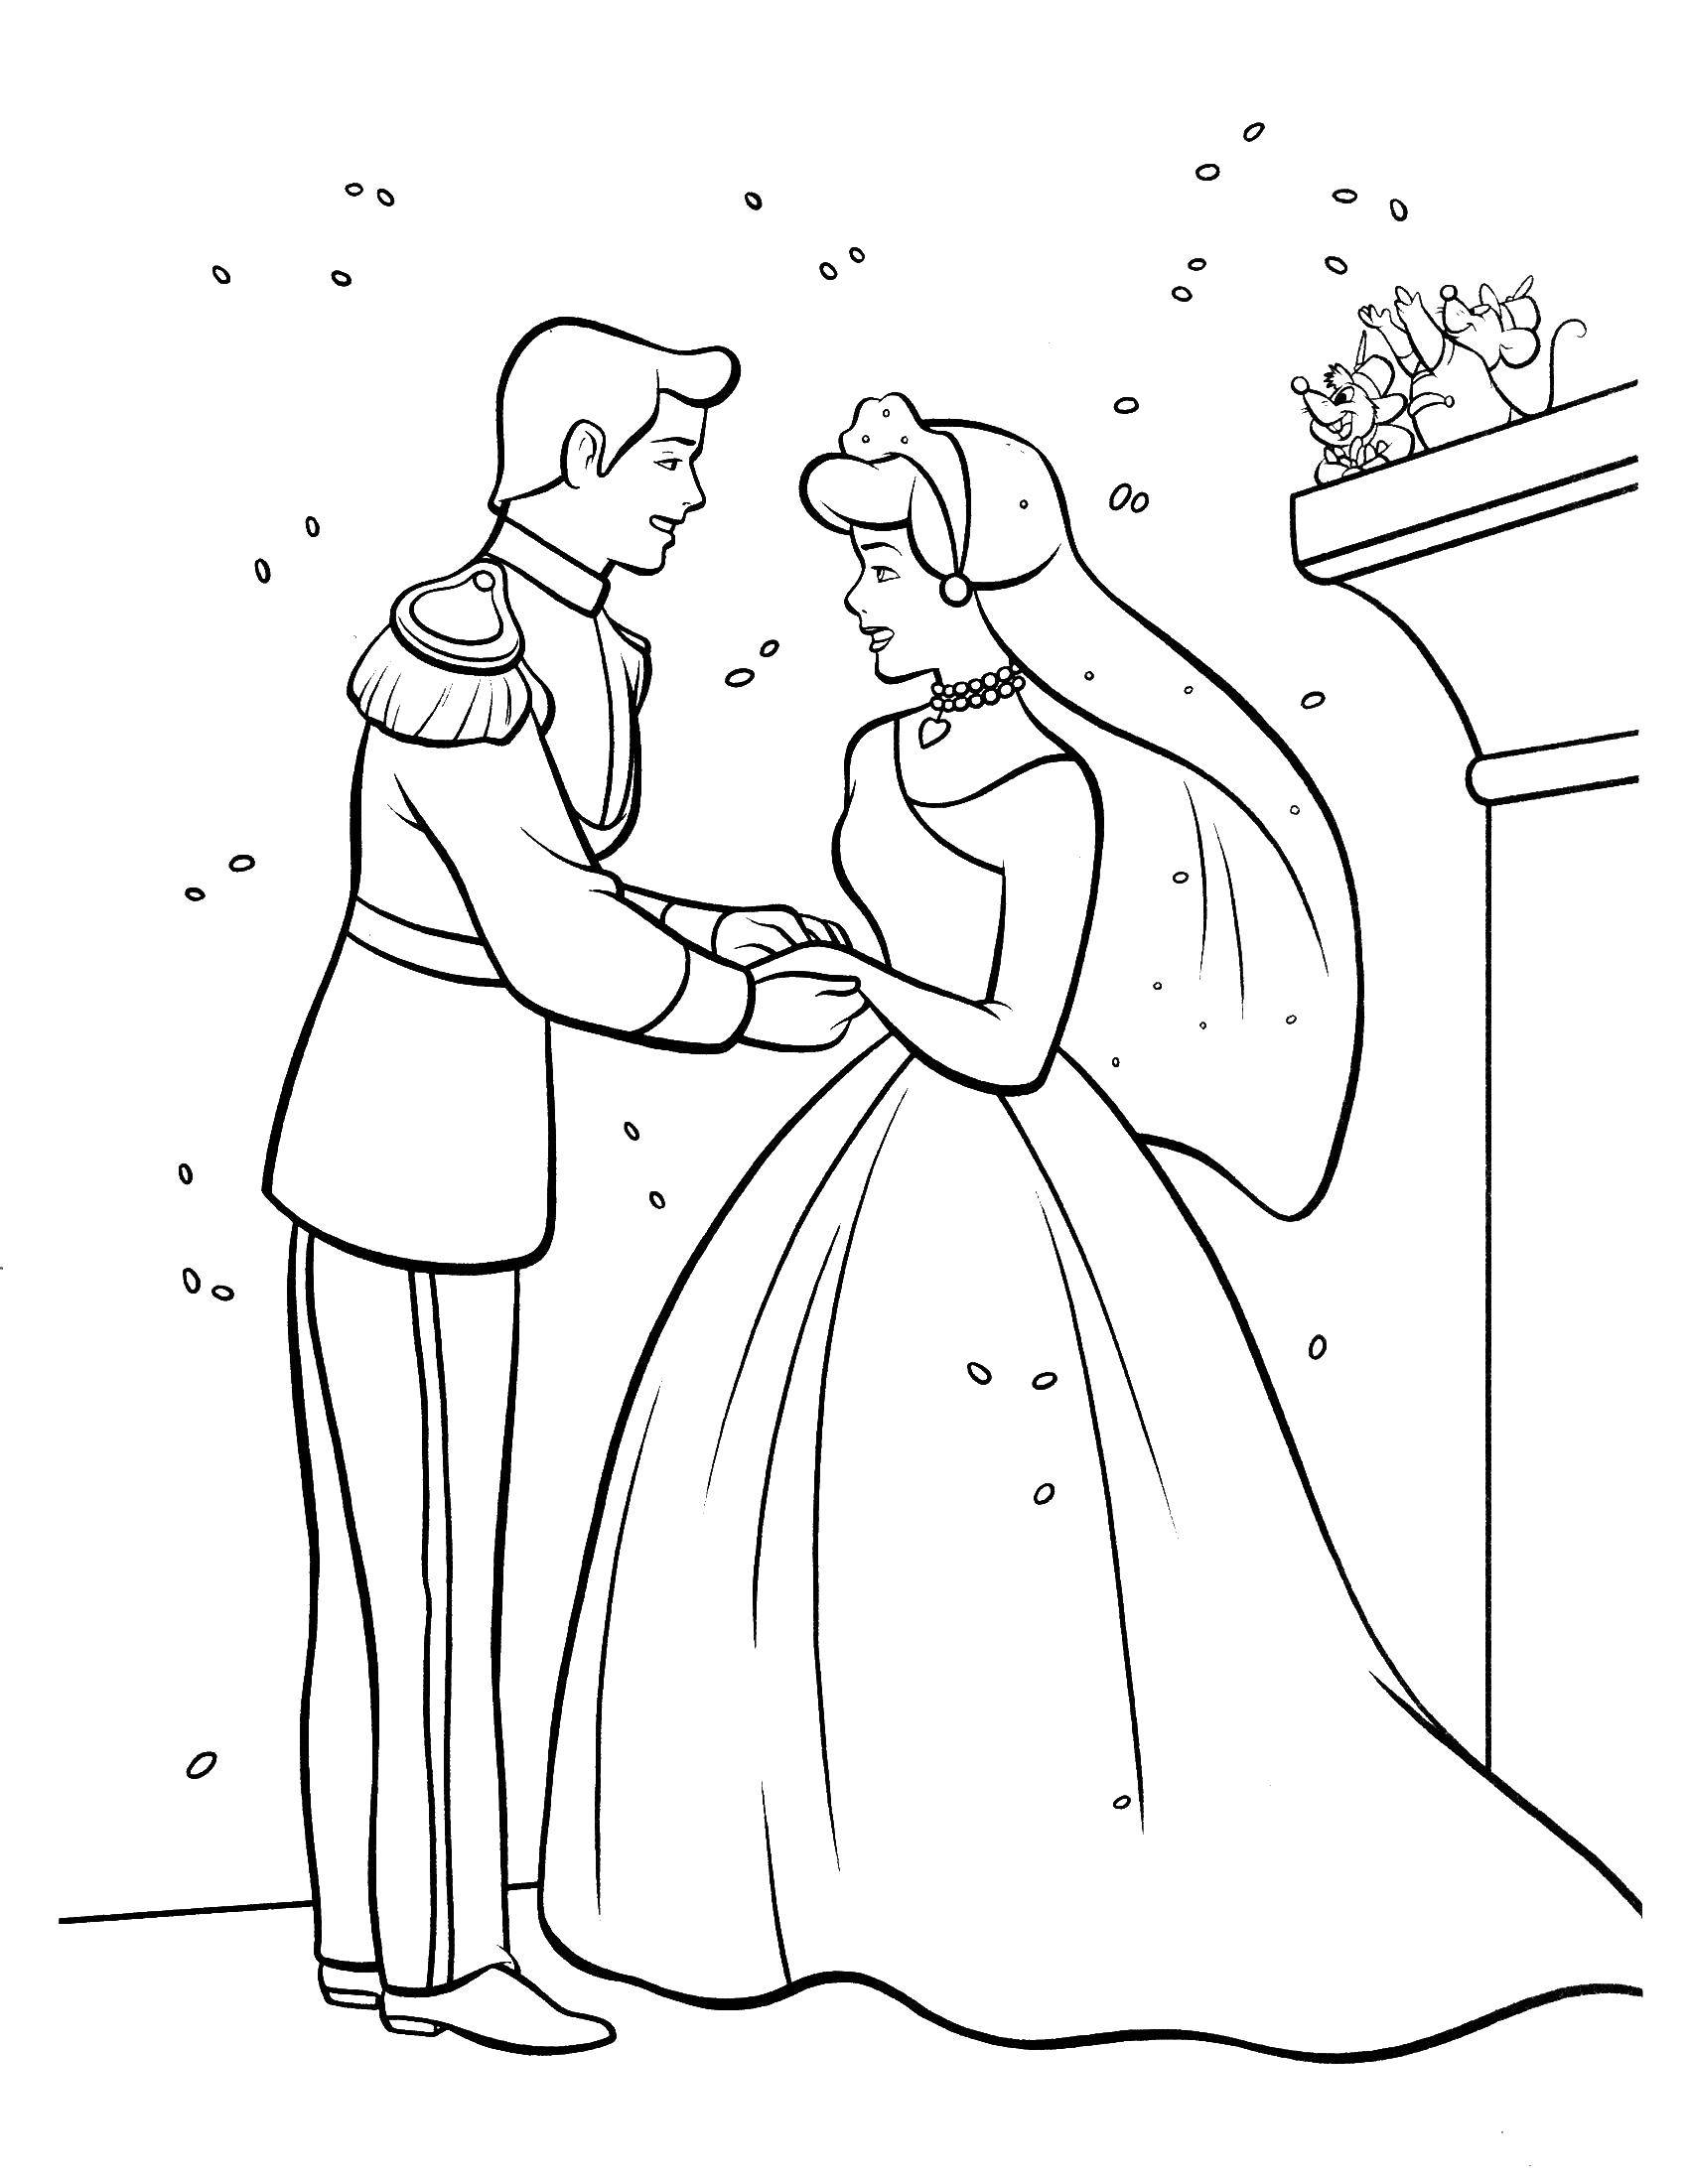 Coloring Prince and Princess. Category Wedding. Tags:  wedding, Prince, Princess.